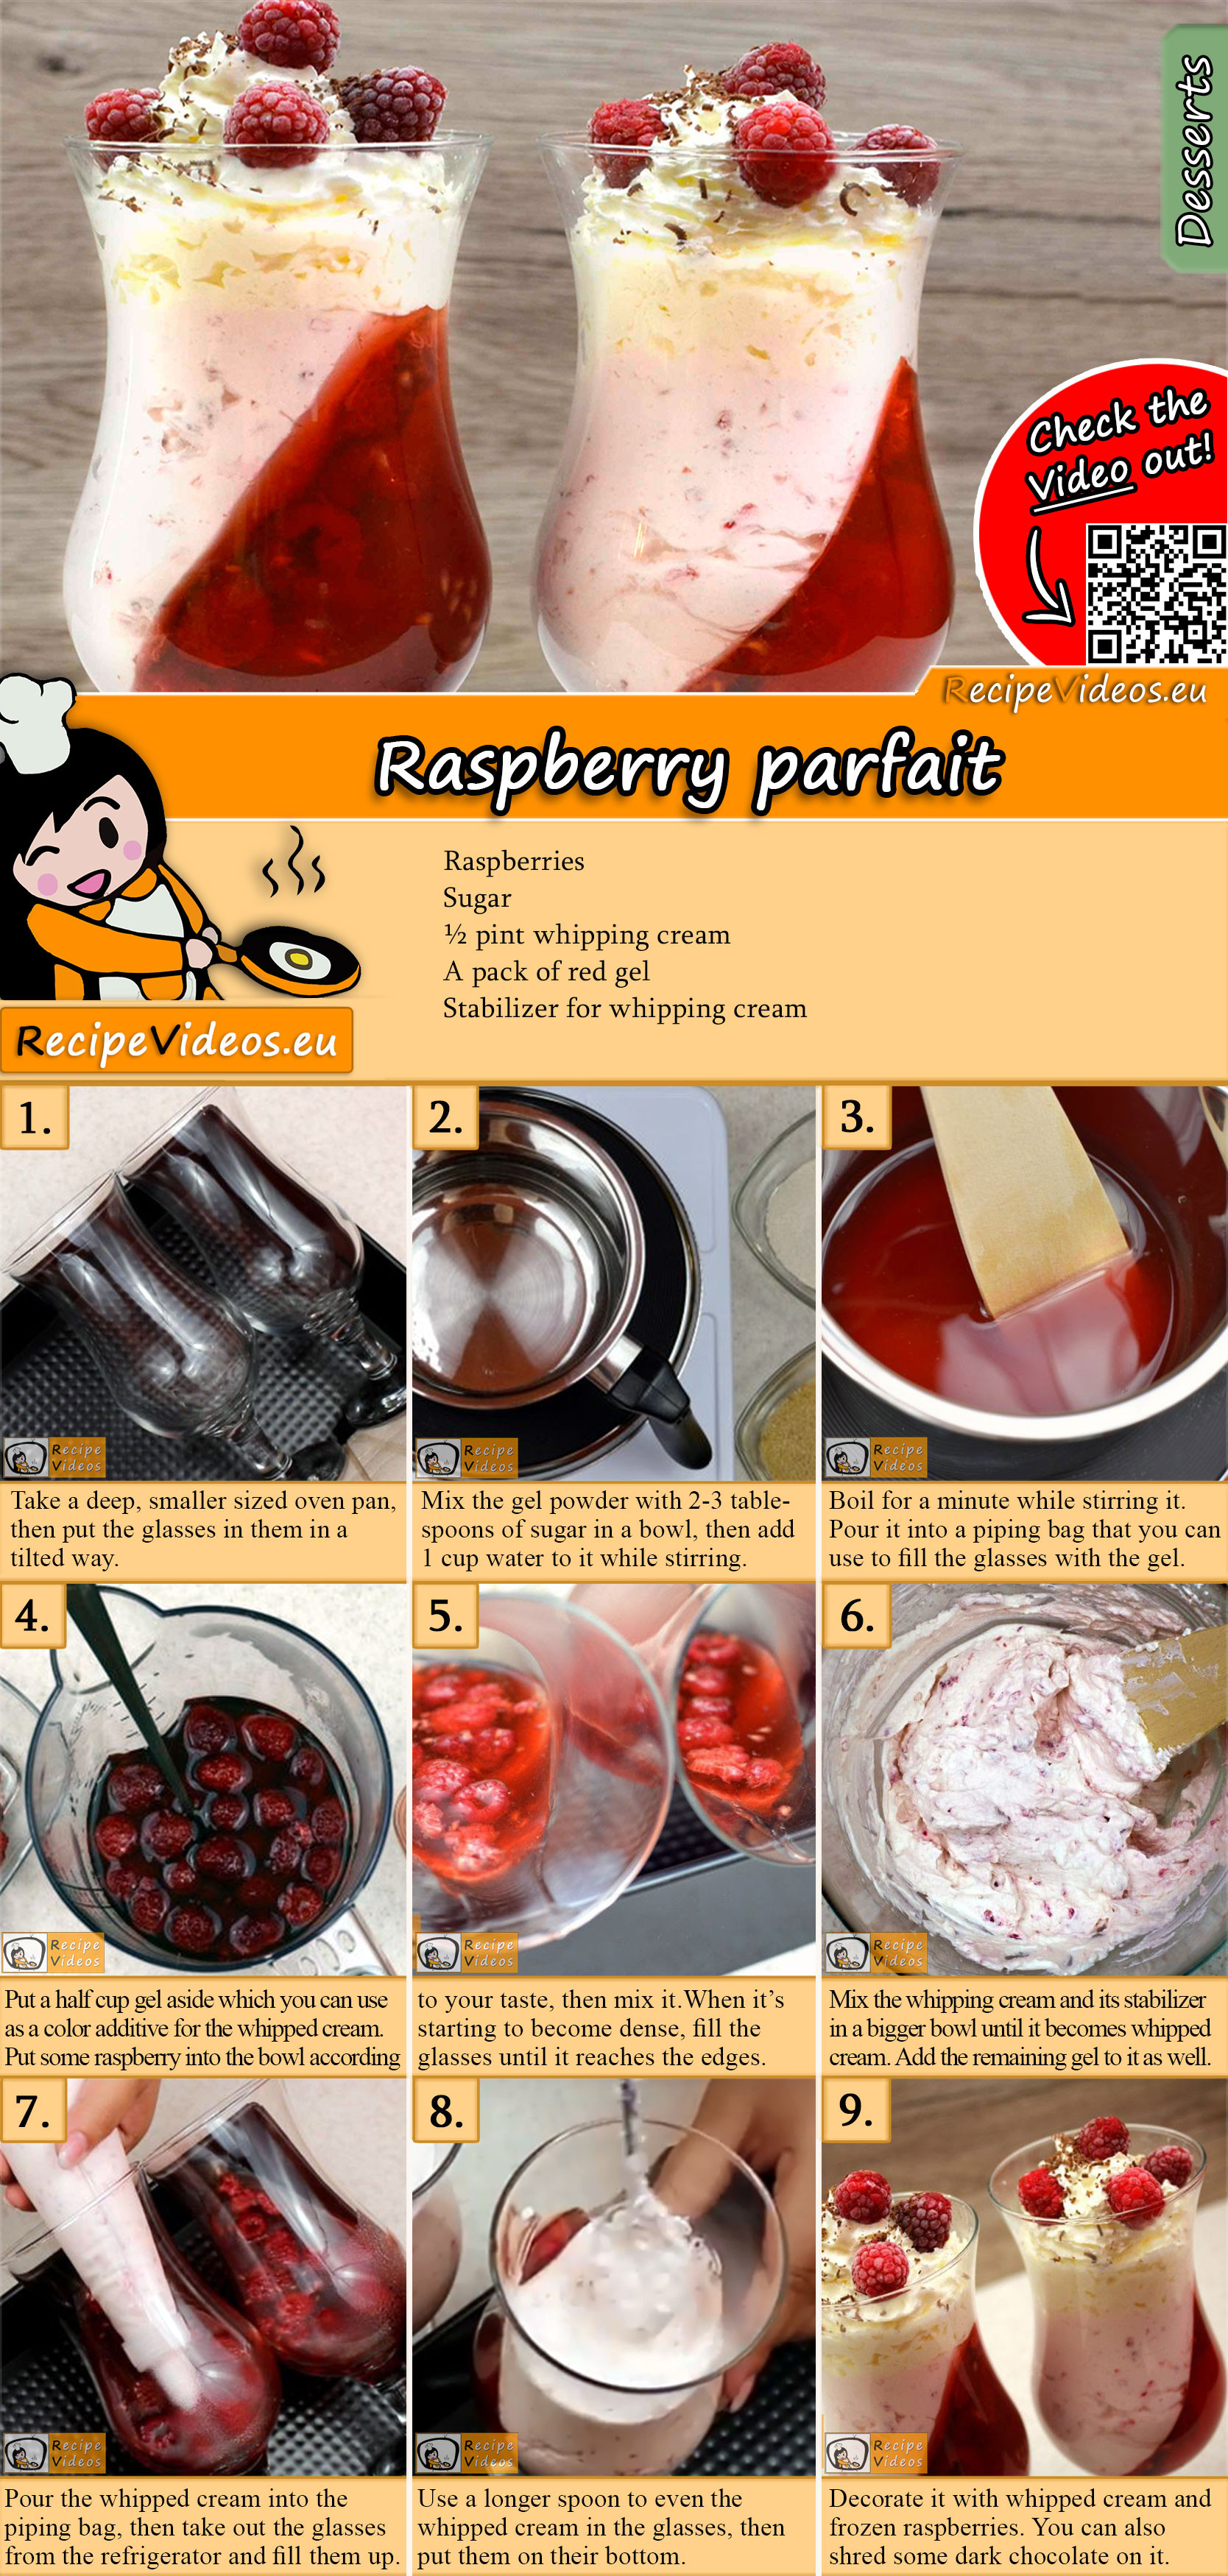 Raspberry parfait recipe with video